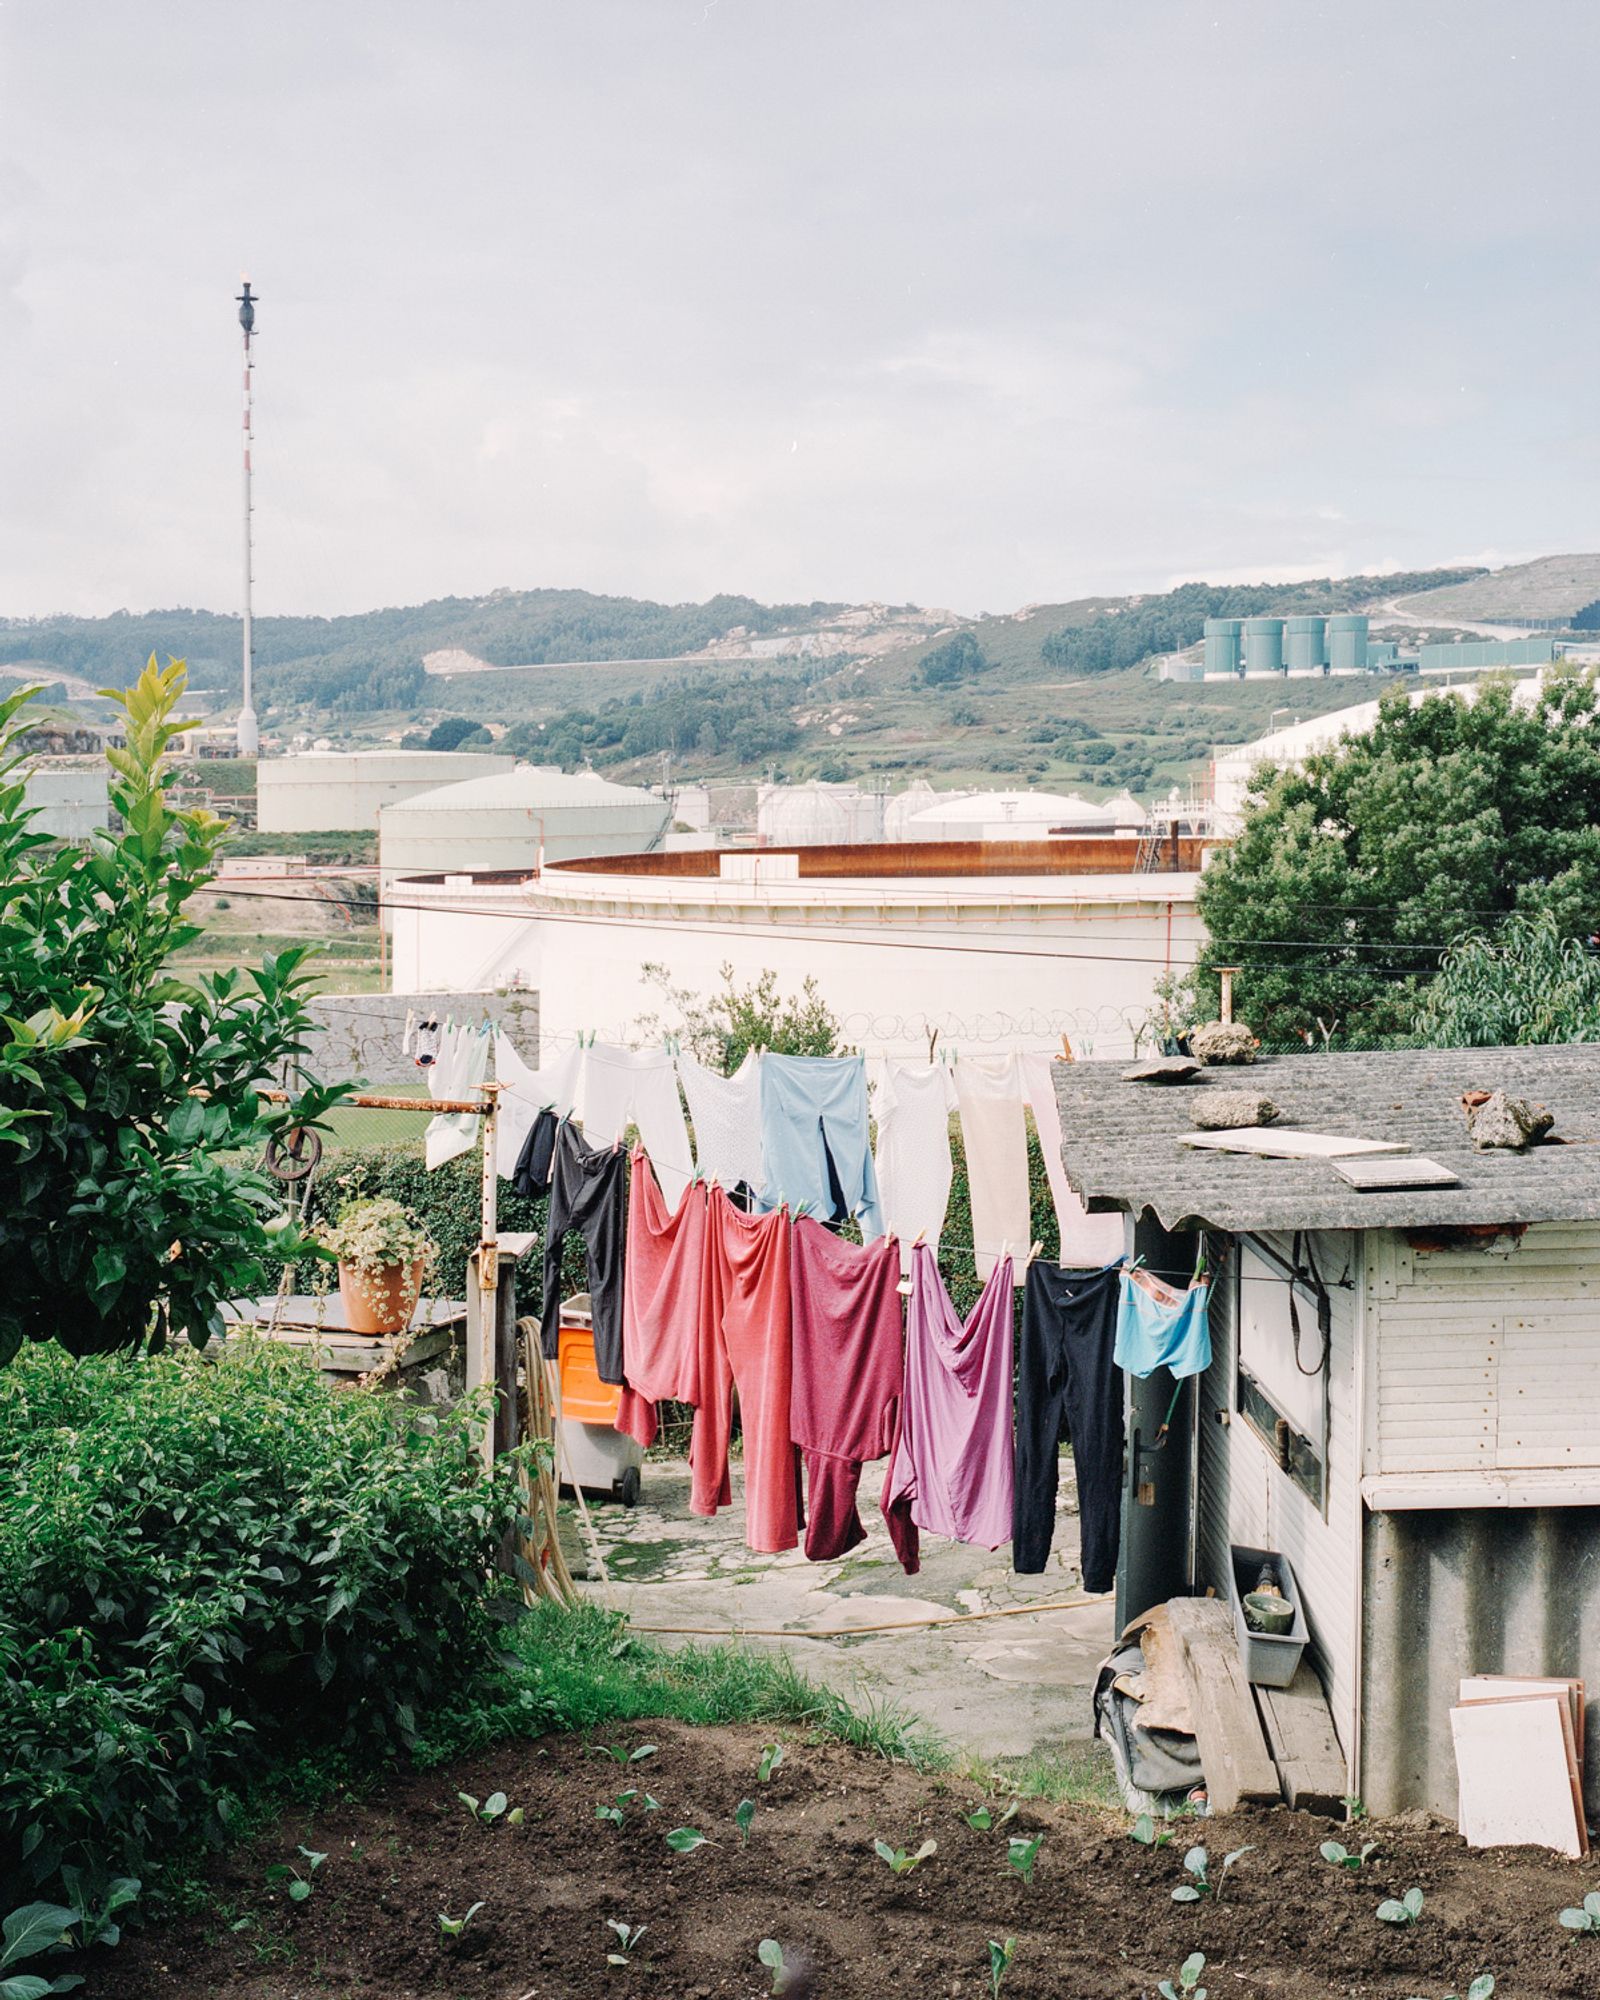 © Paweł Jaśkiewicz - Image from the A Coruña photography project